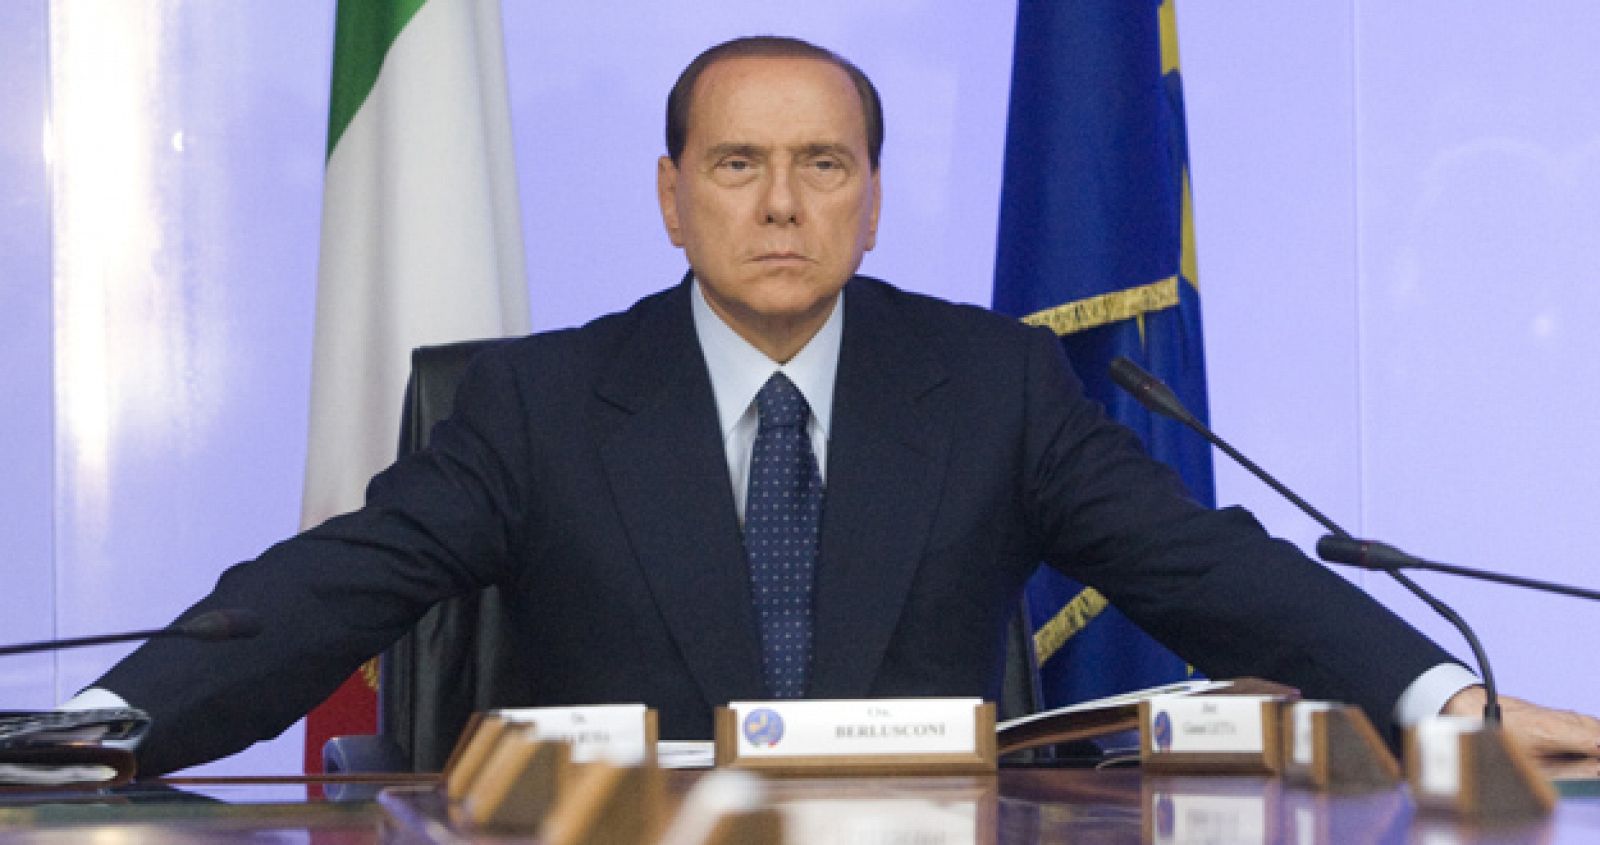 El primer ministro italiano, Silvio Berlusconi, propondrá esta medida en la Cámara italiana